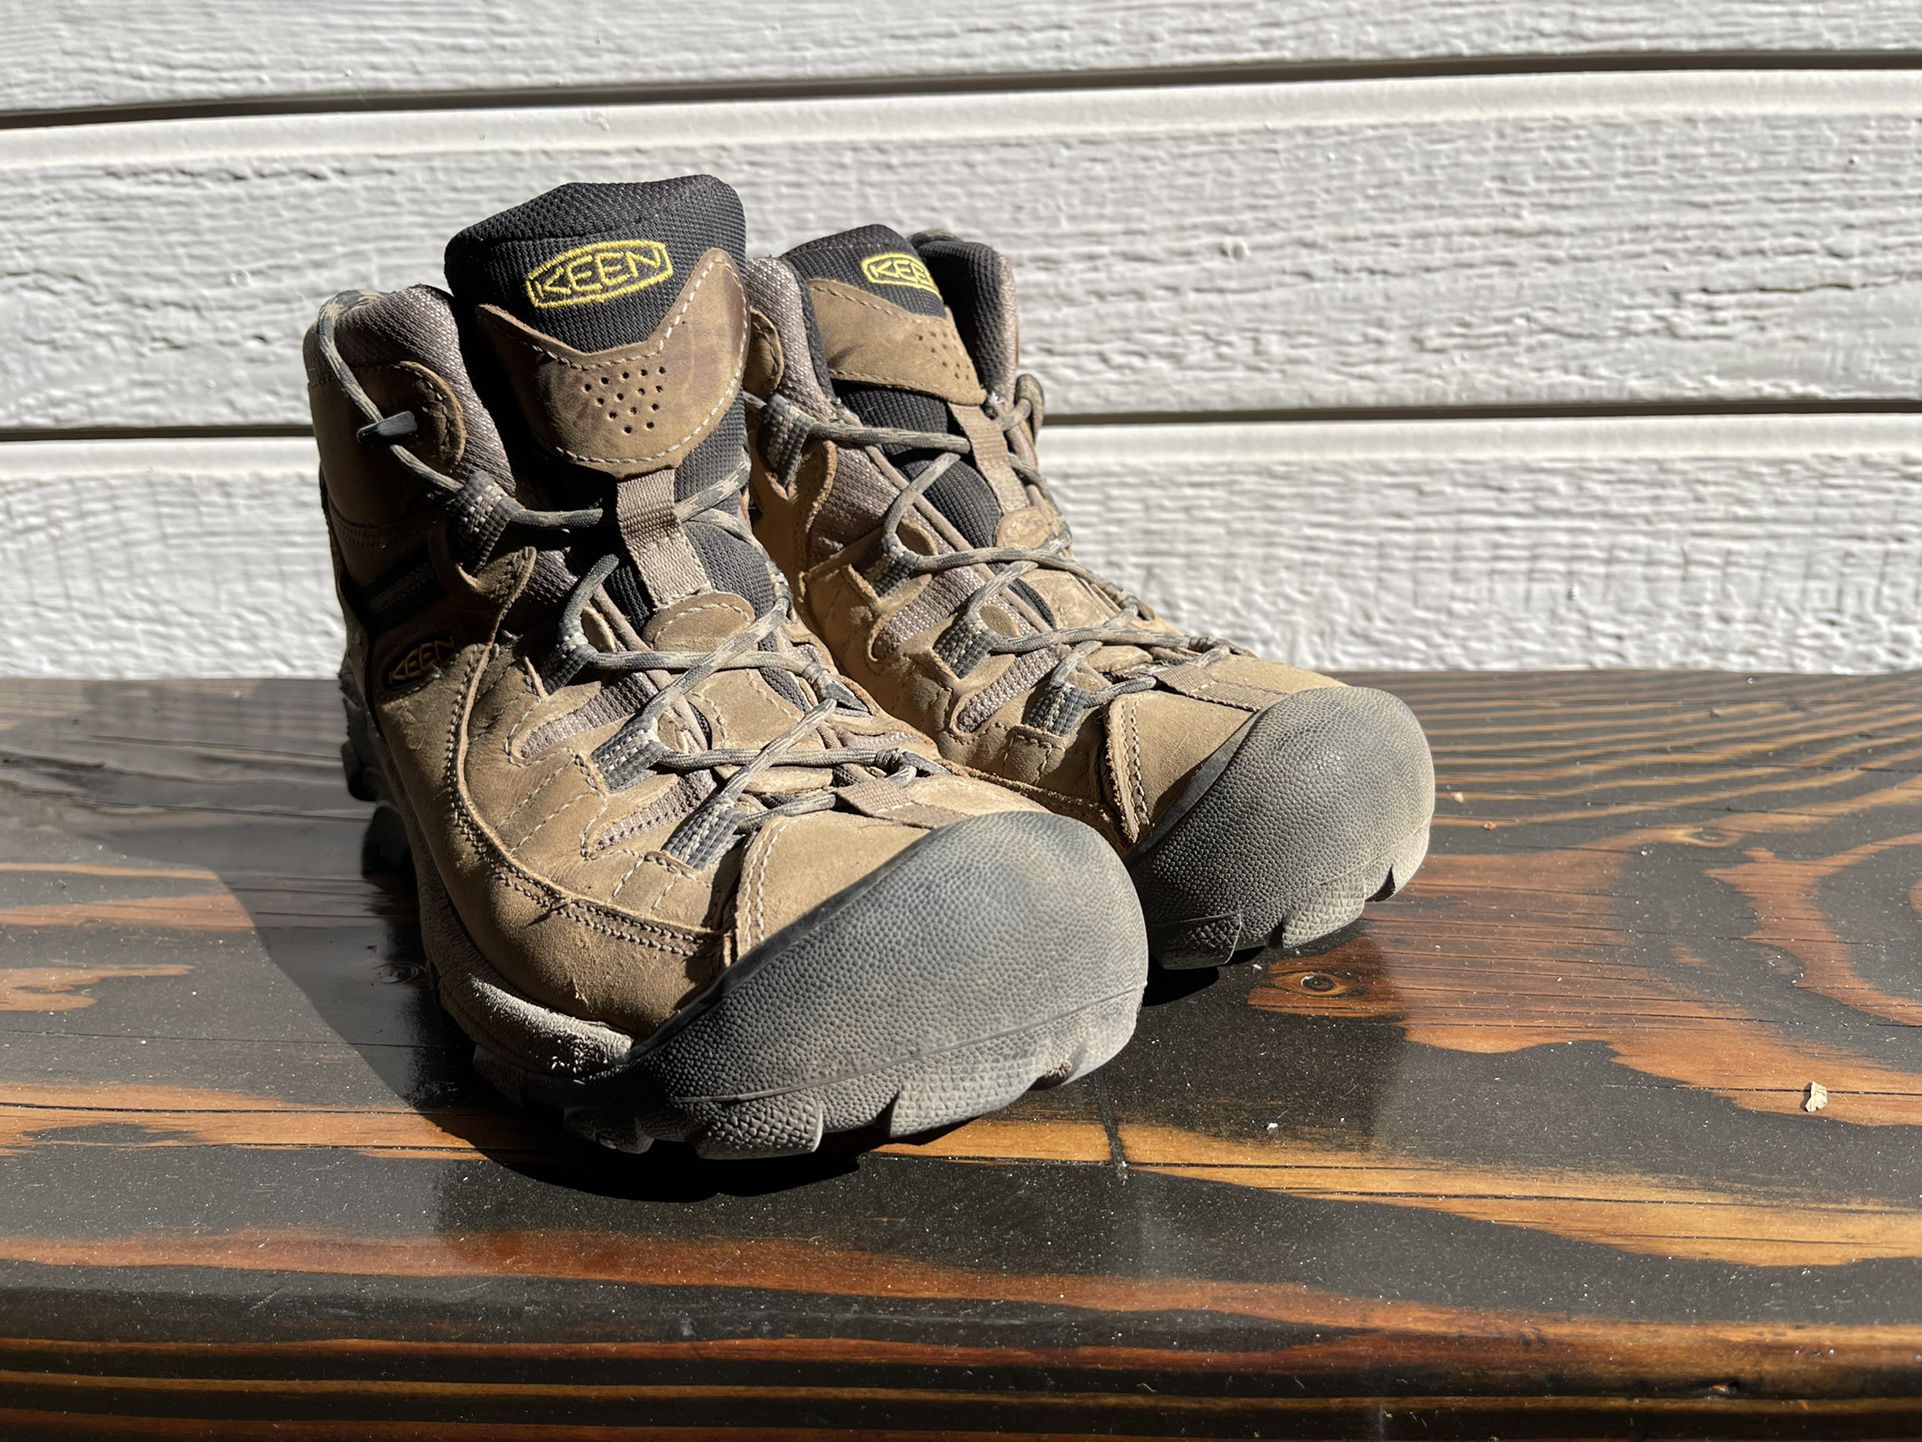 Men’s KEEN Leather Waterproof Hiking Boot Size 9.5